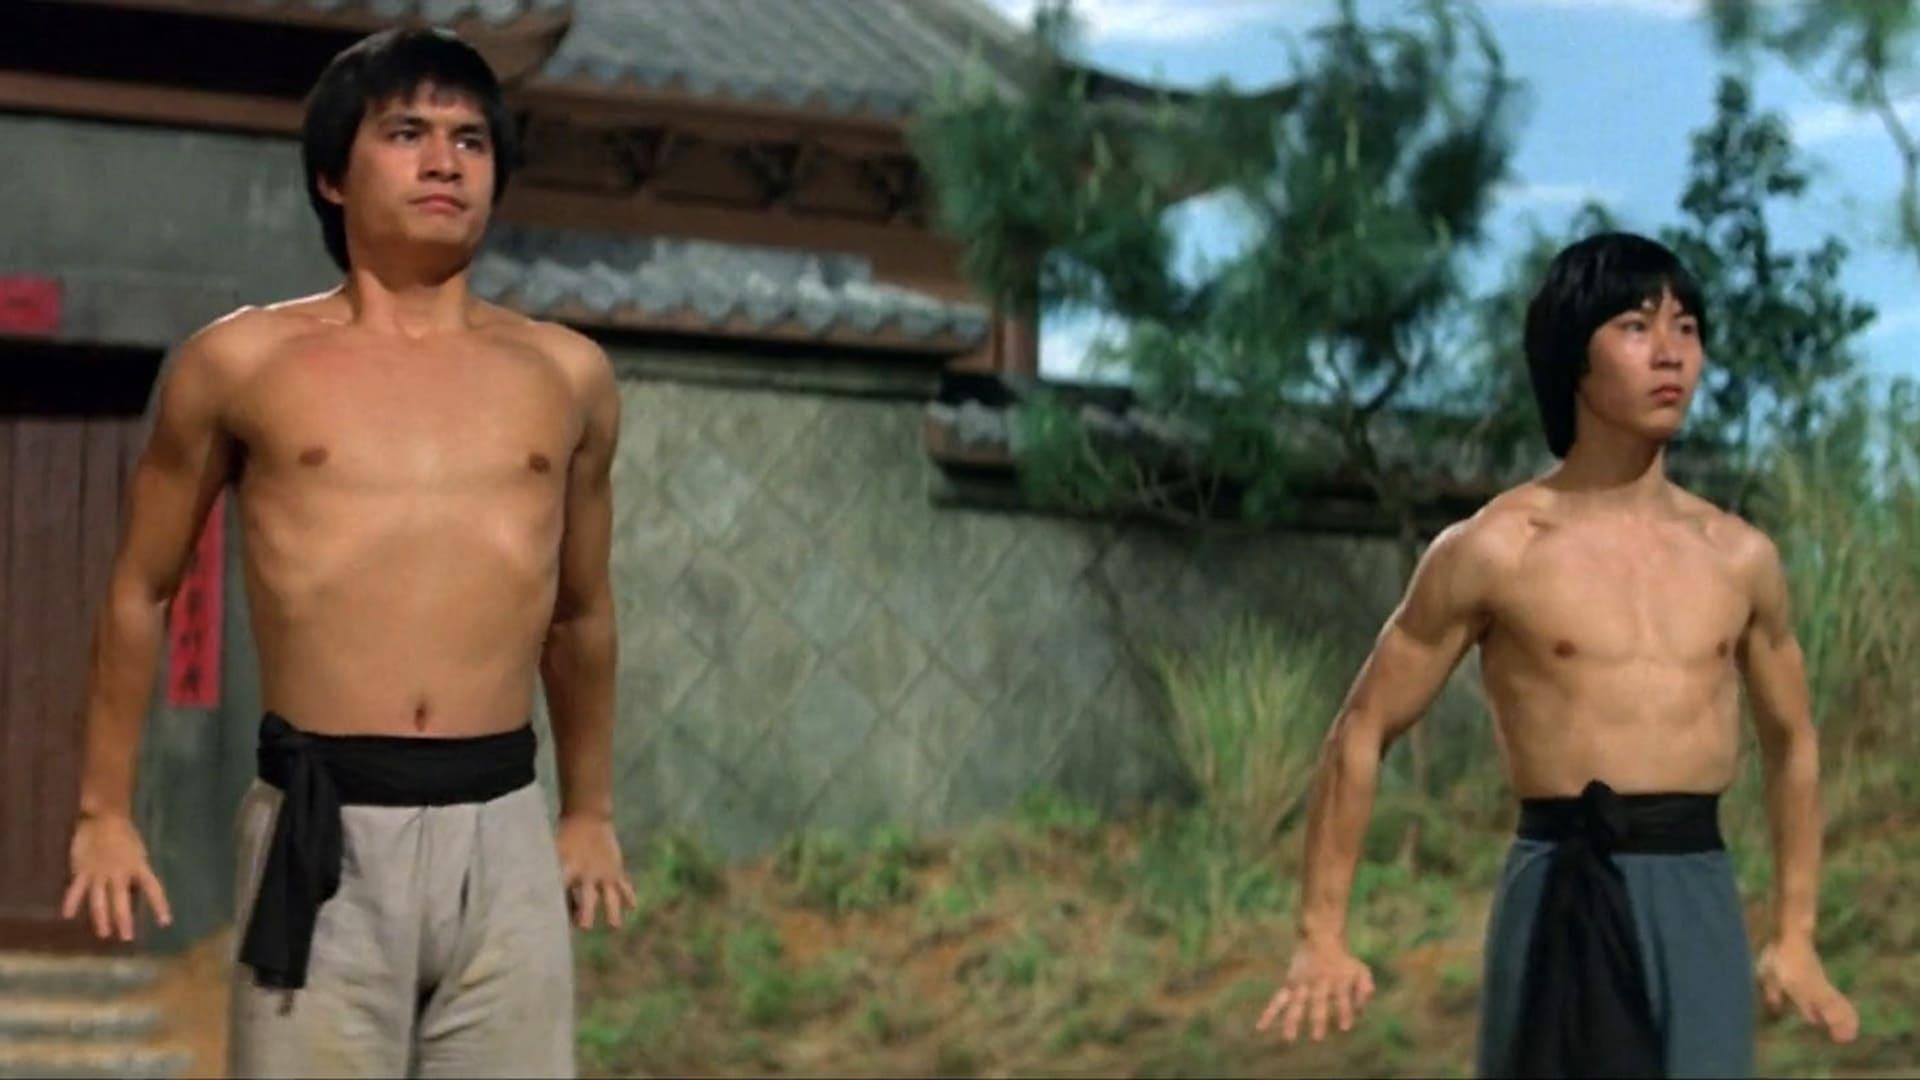 The New Shaolin Boxers backdrop